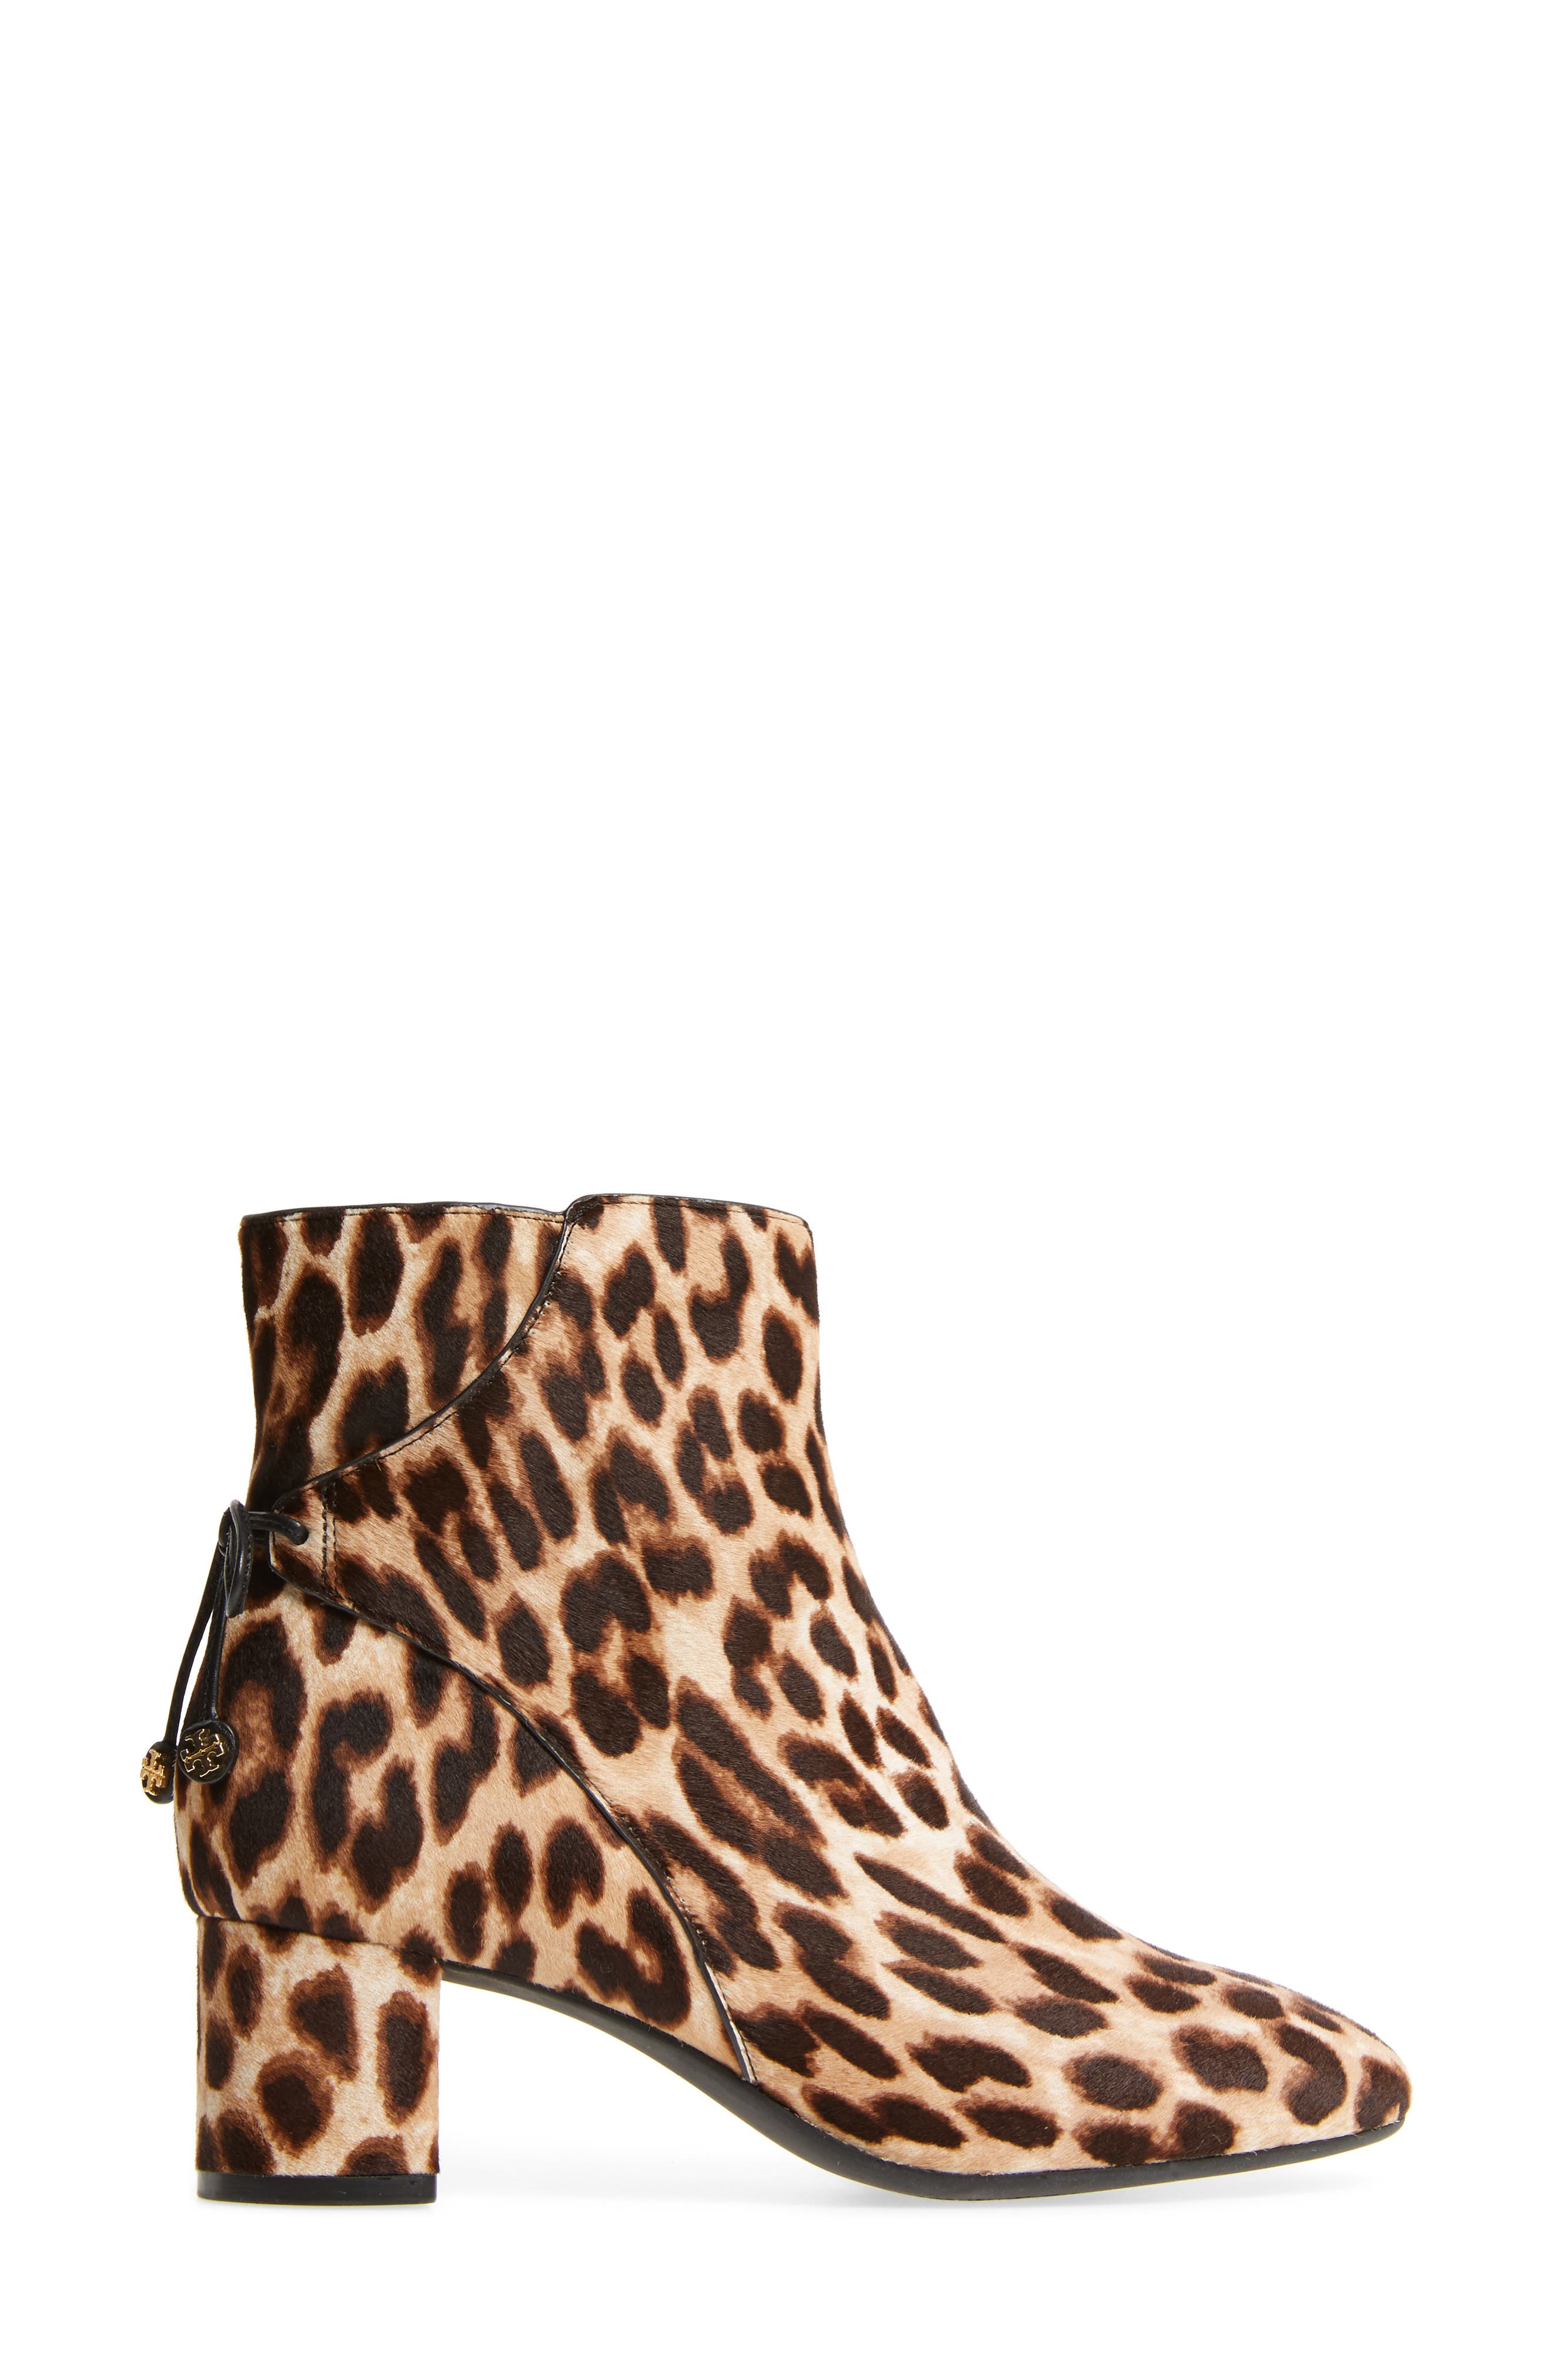 tory burch leopard boots